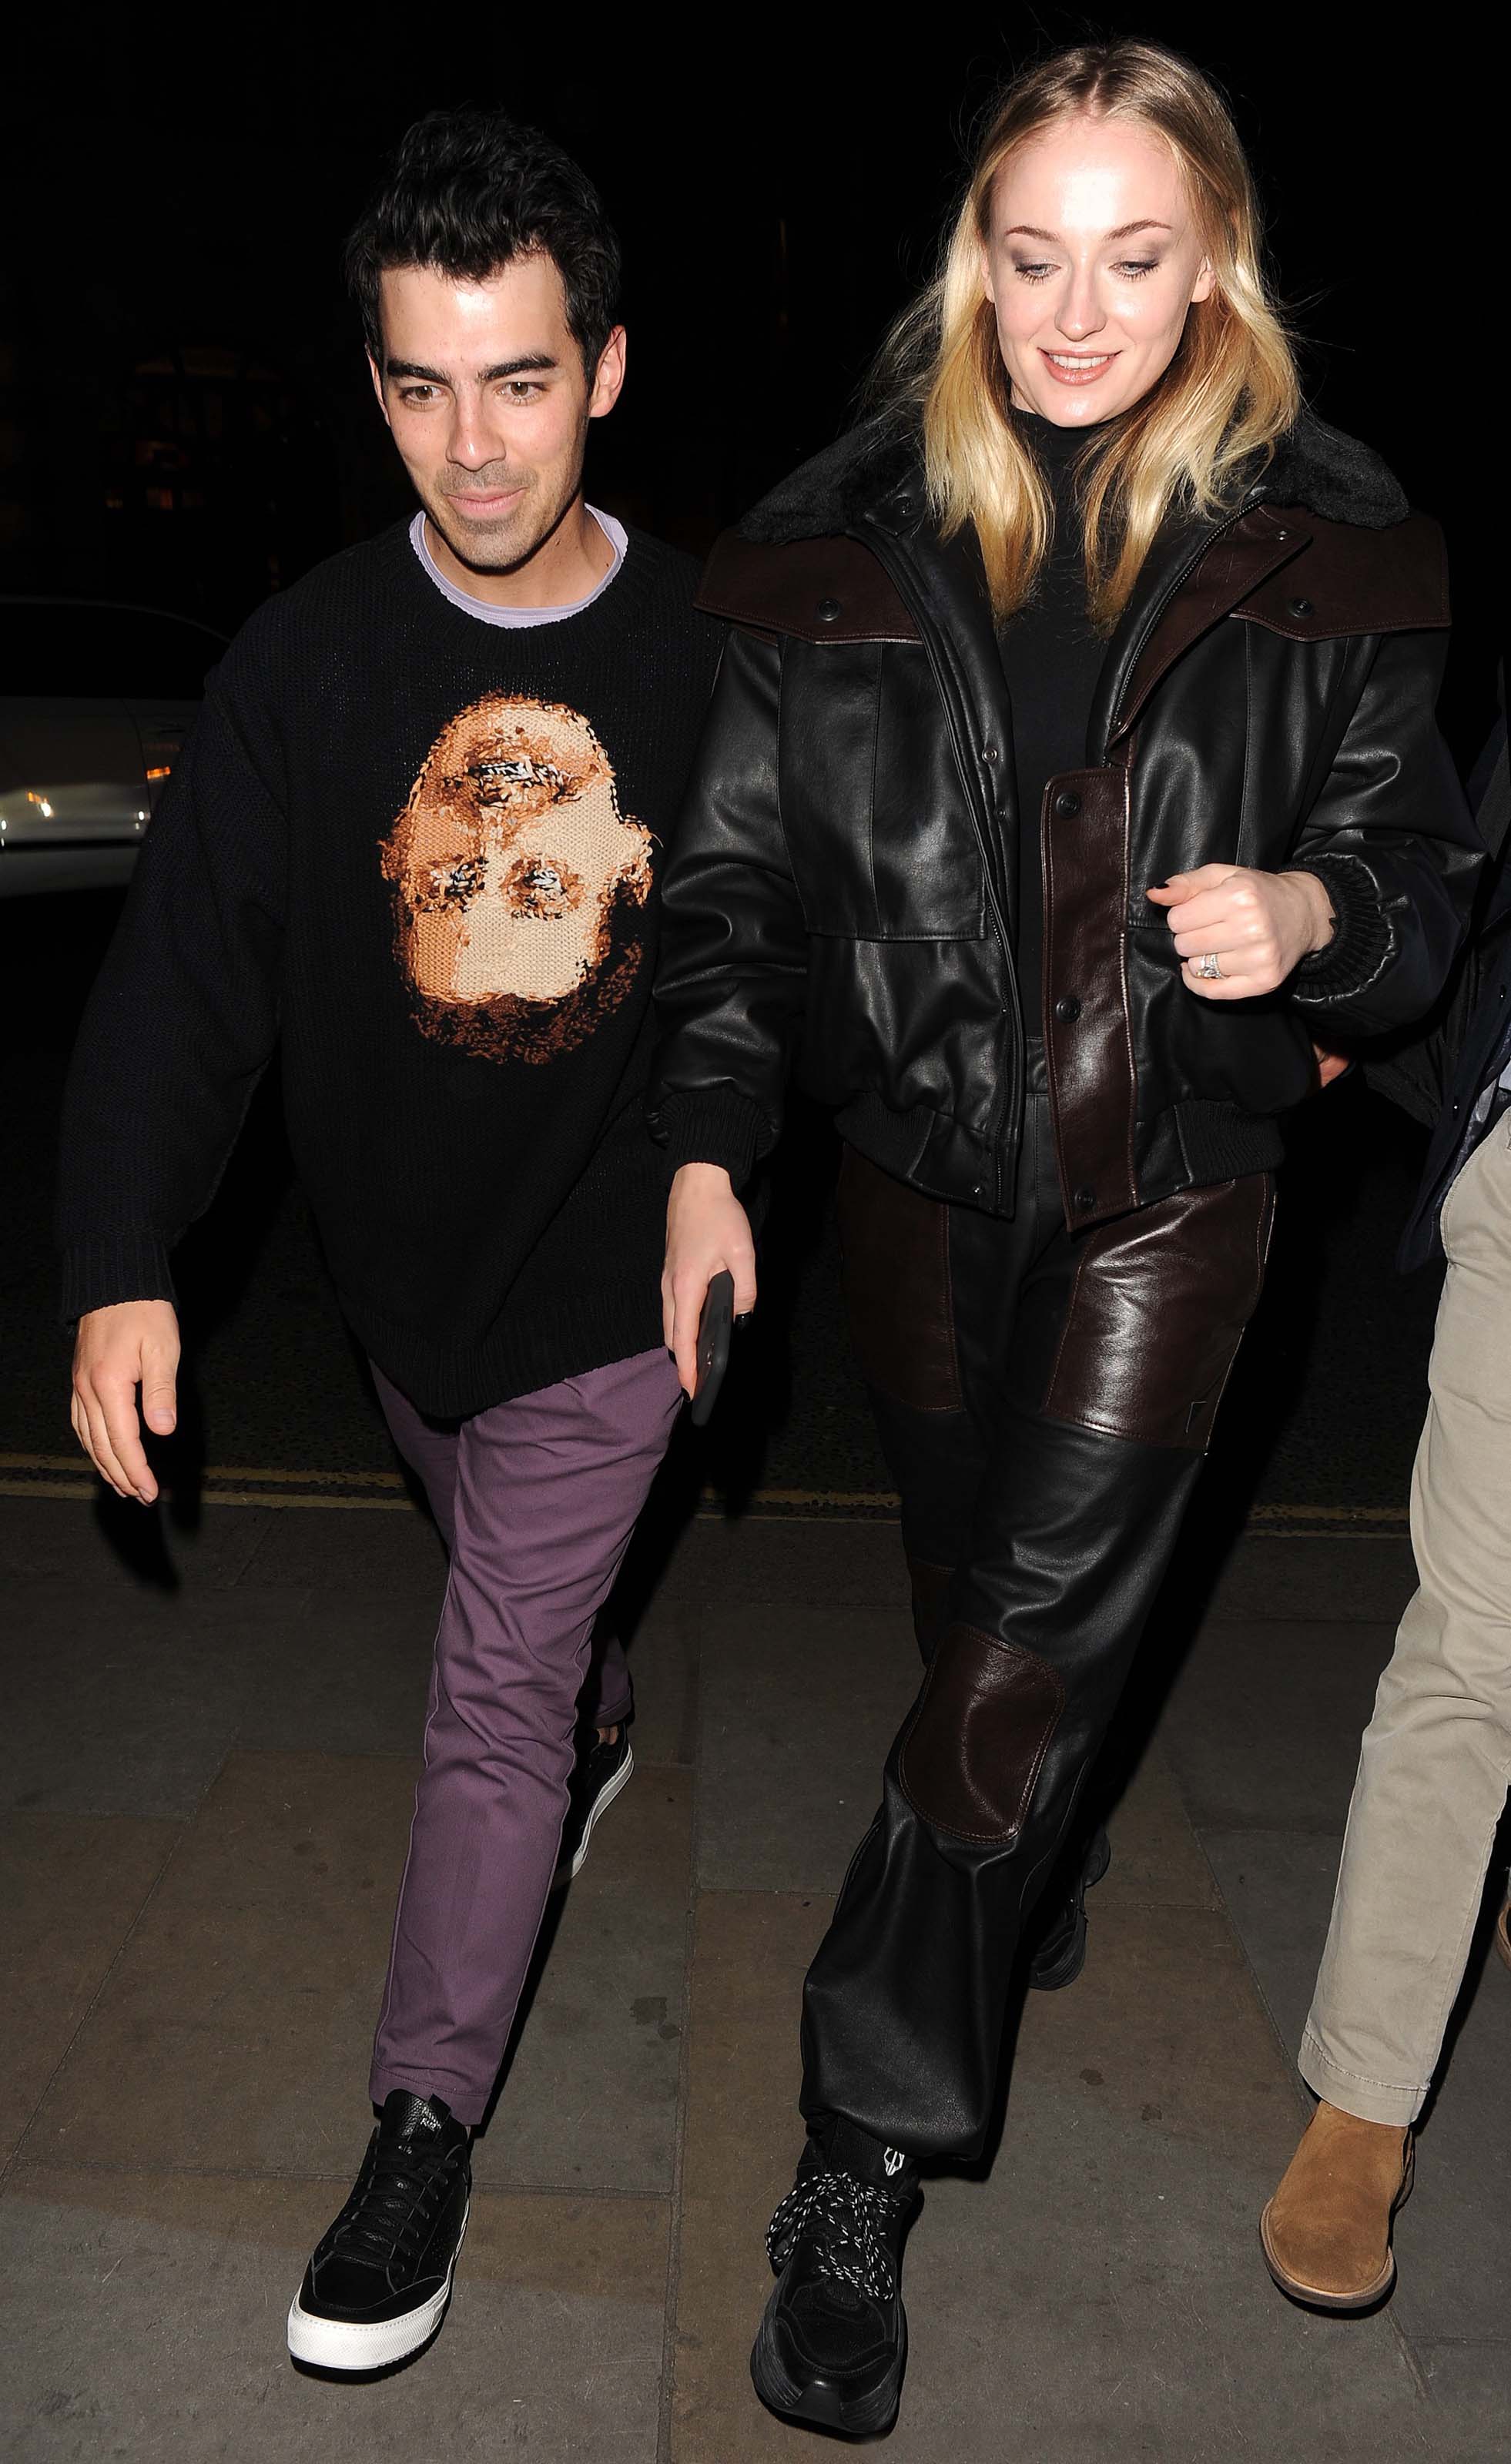 Sophie Turner and Joe Jonas returning to their hotel